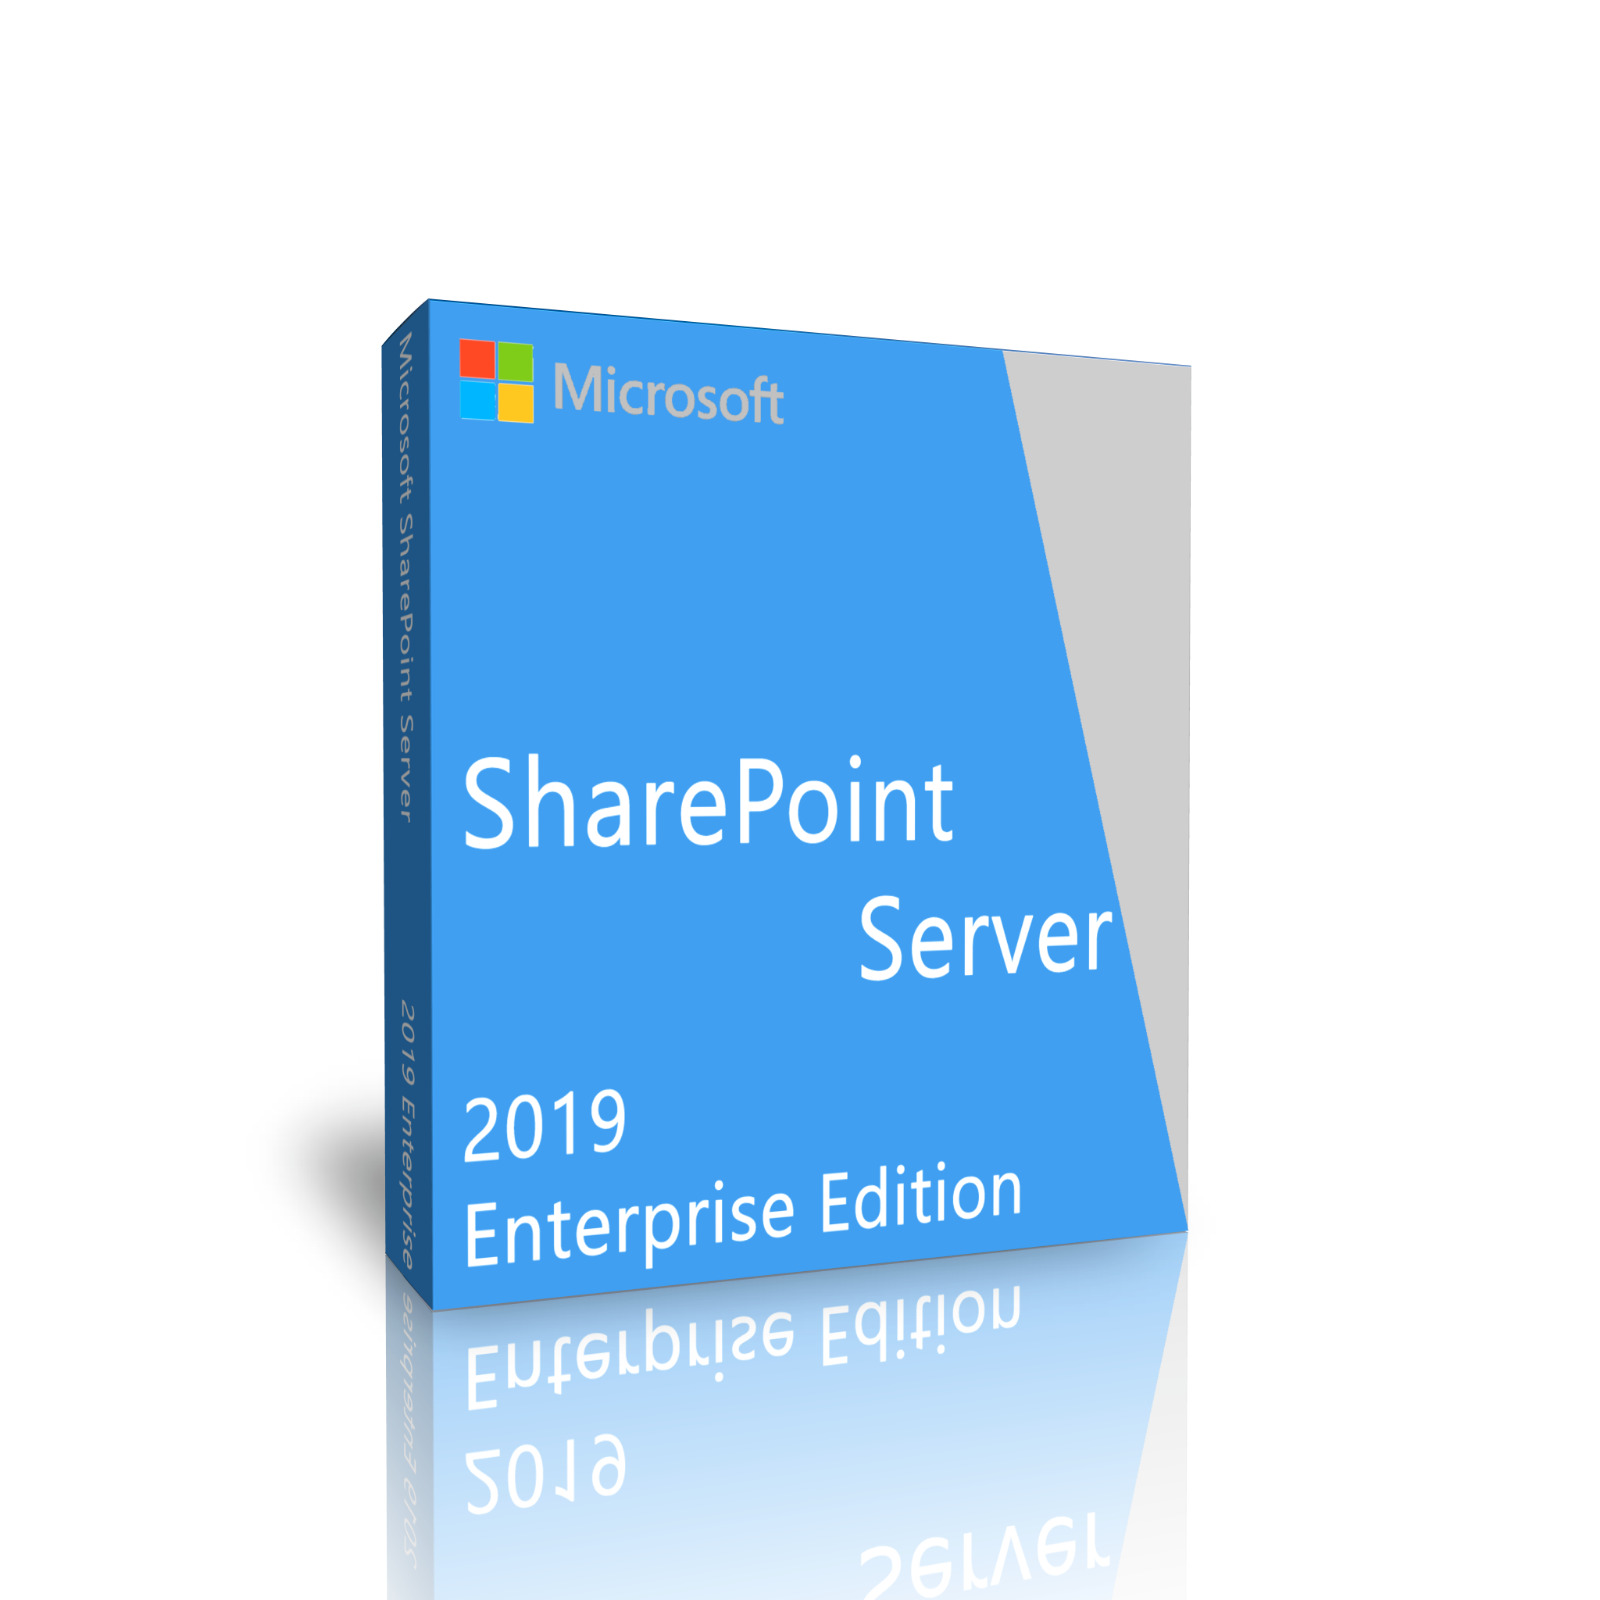 SharePoint Server 2019 Enterprise Edition 64 Bit w Project Server and Unl. CALs.